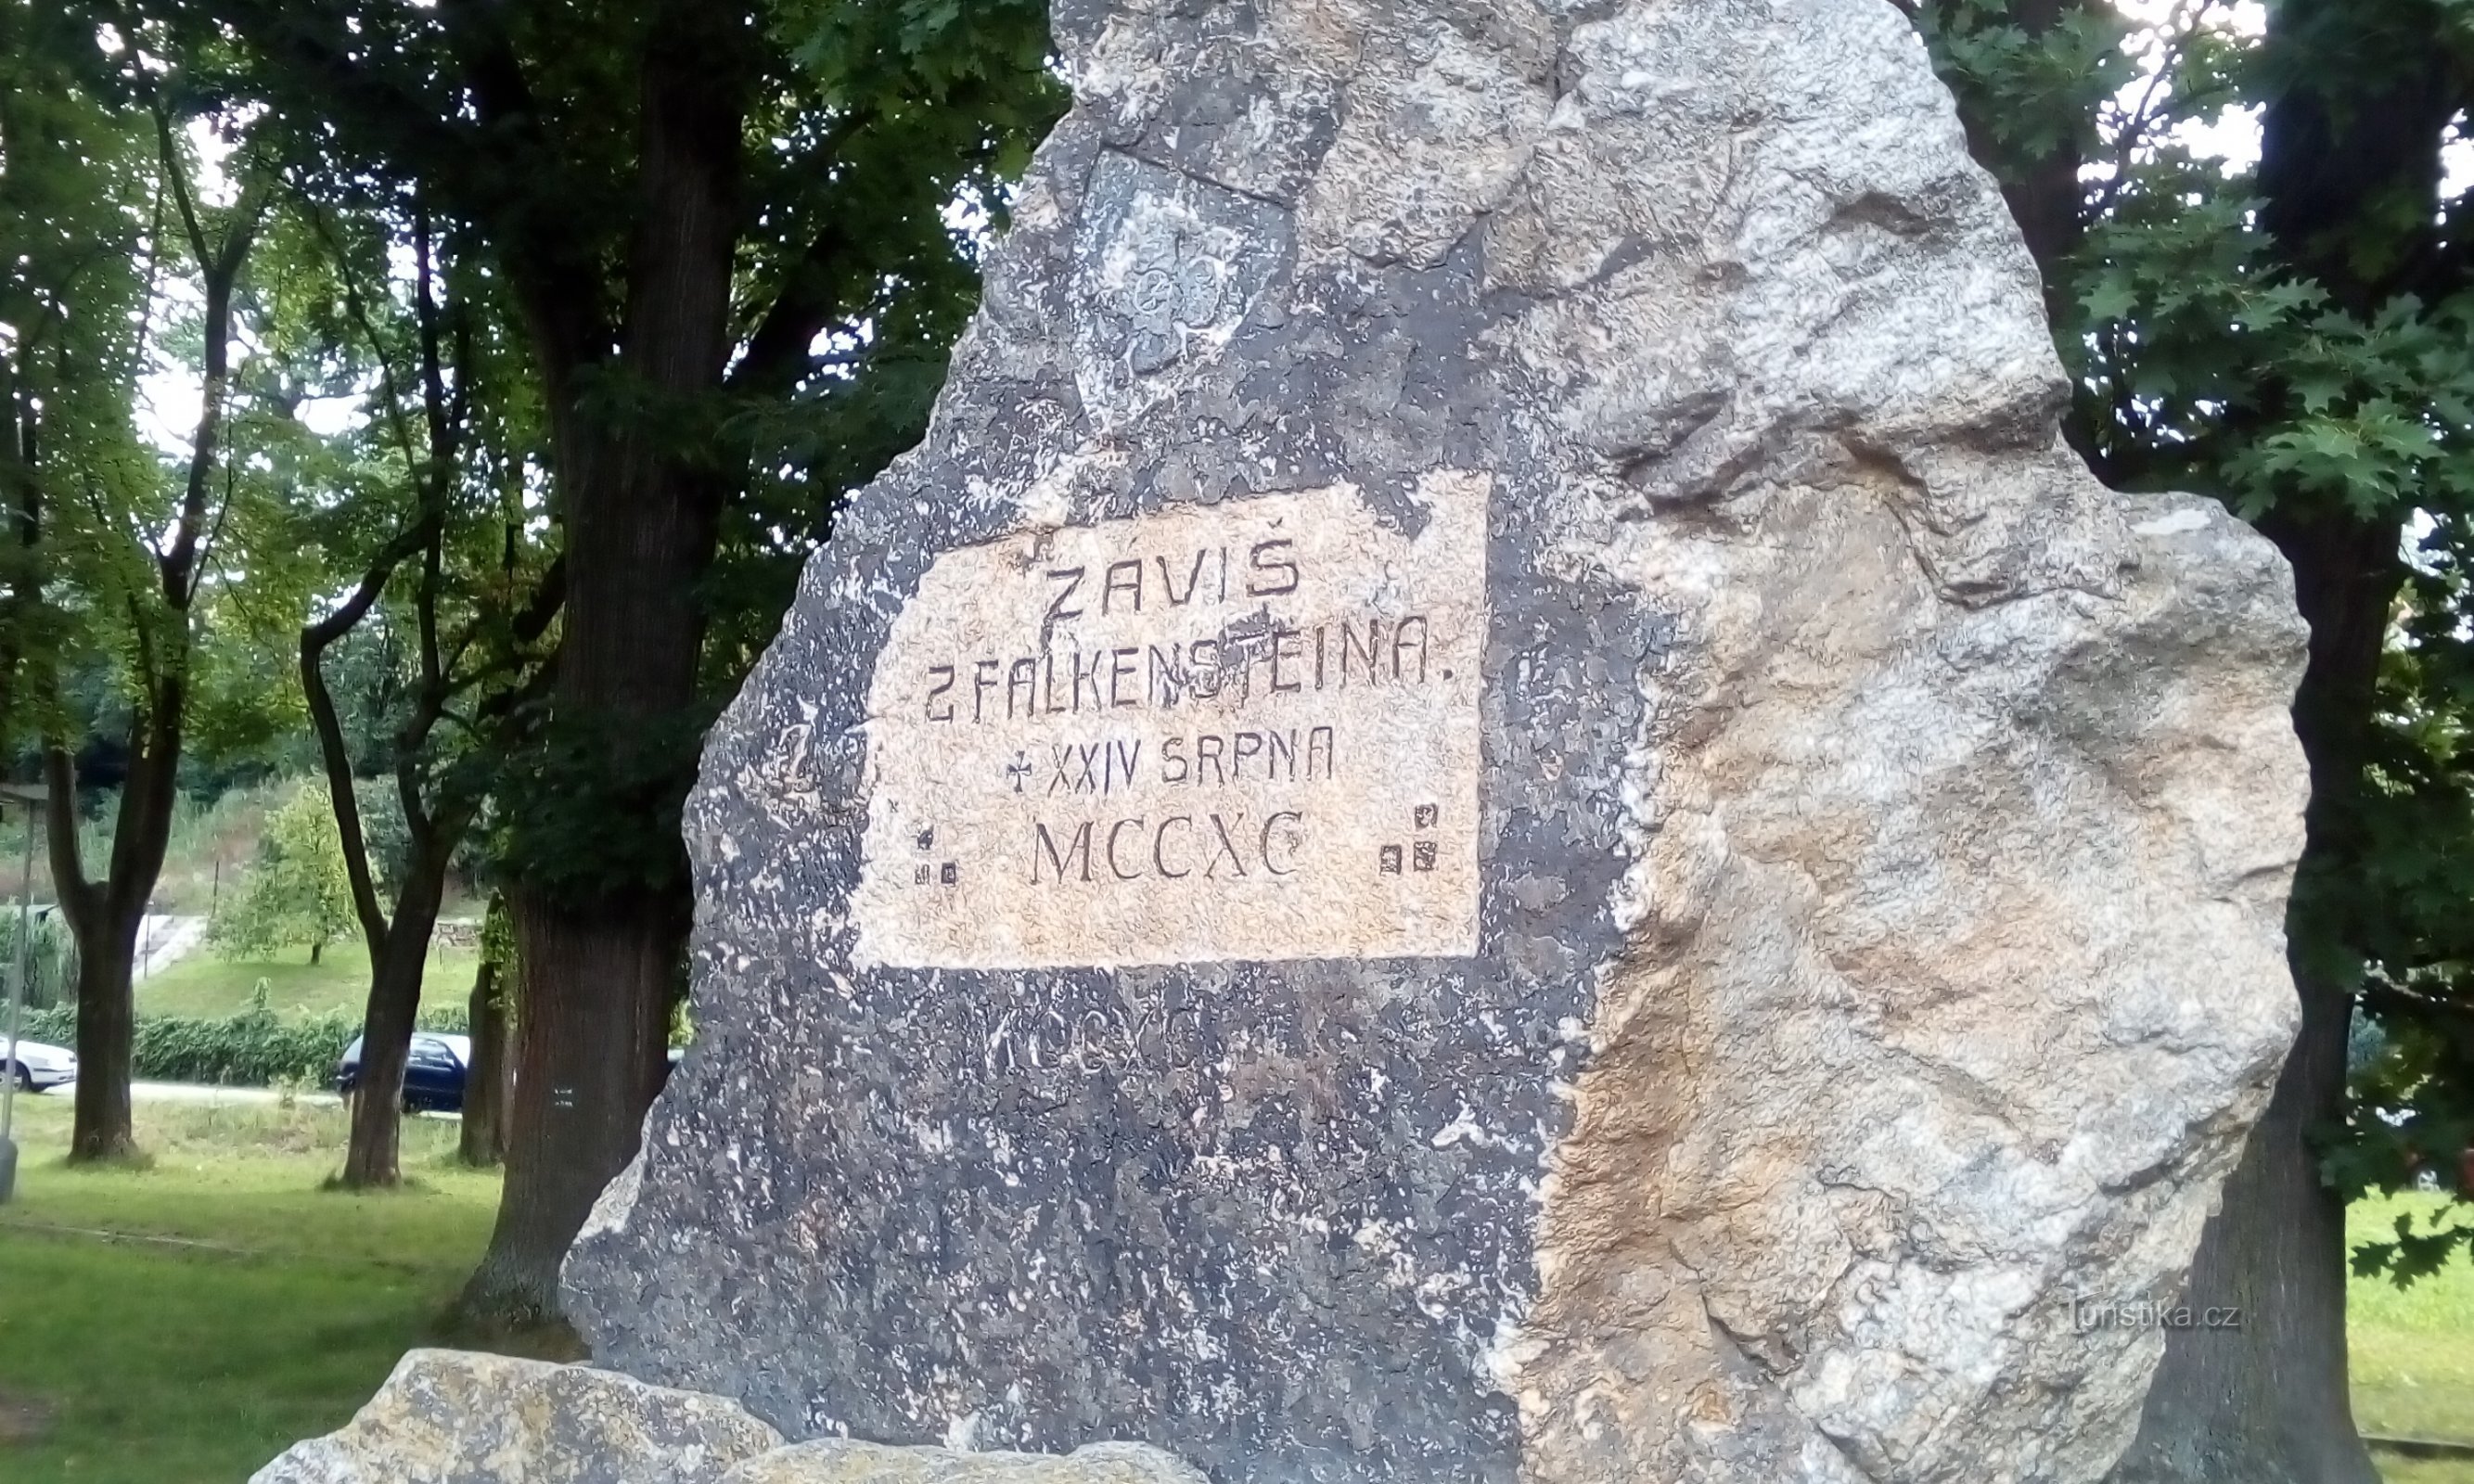 Spomenik Závisu iz Falkensteina